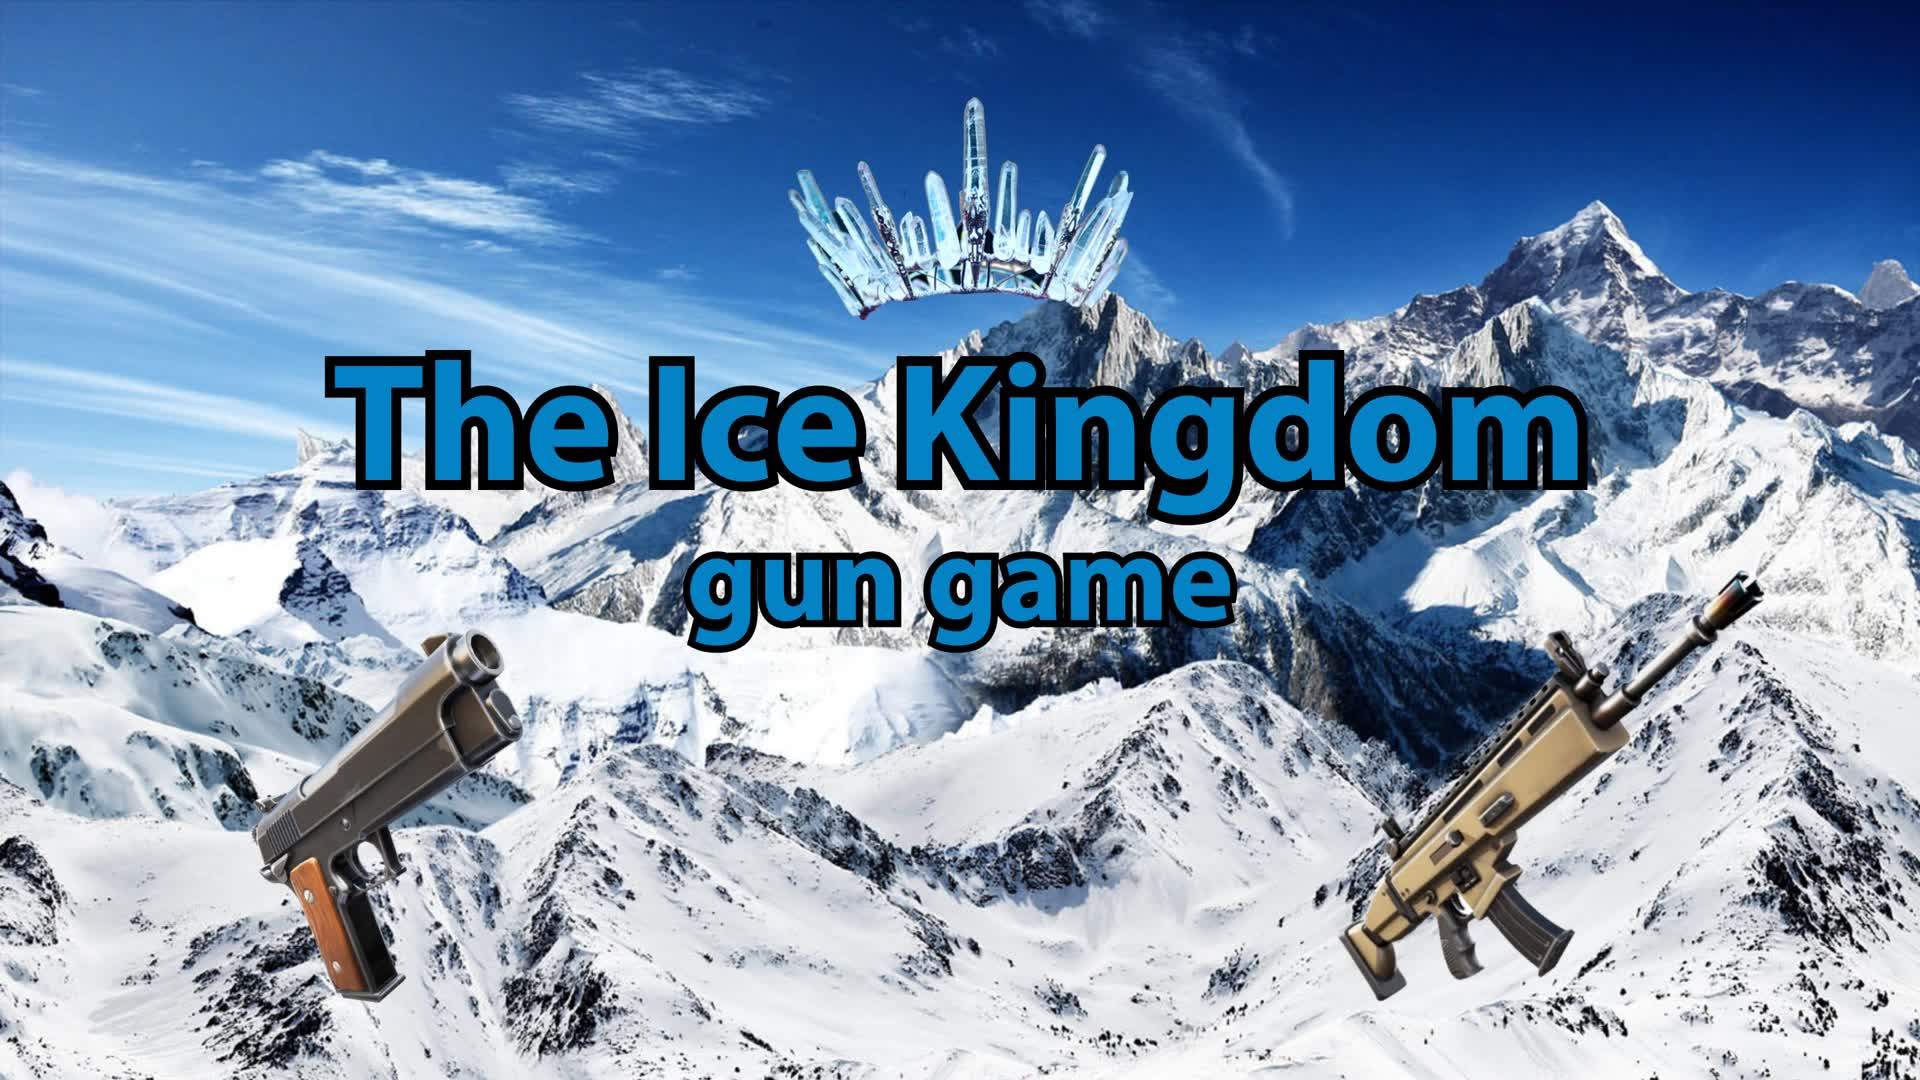 ❄ The Ice Kingdom gun game ❄